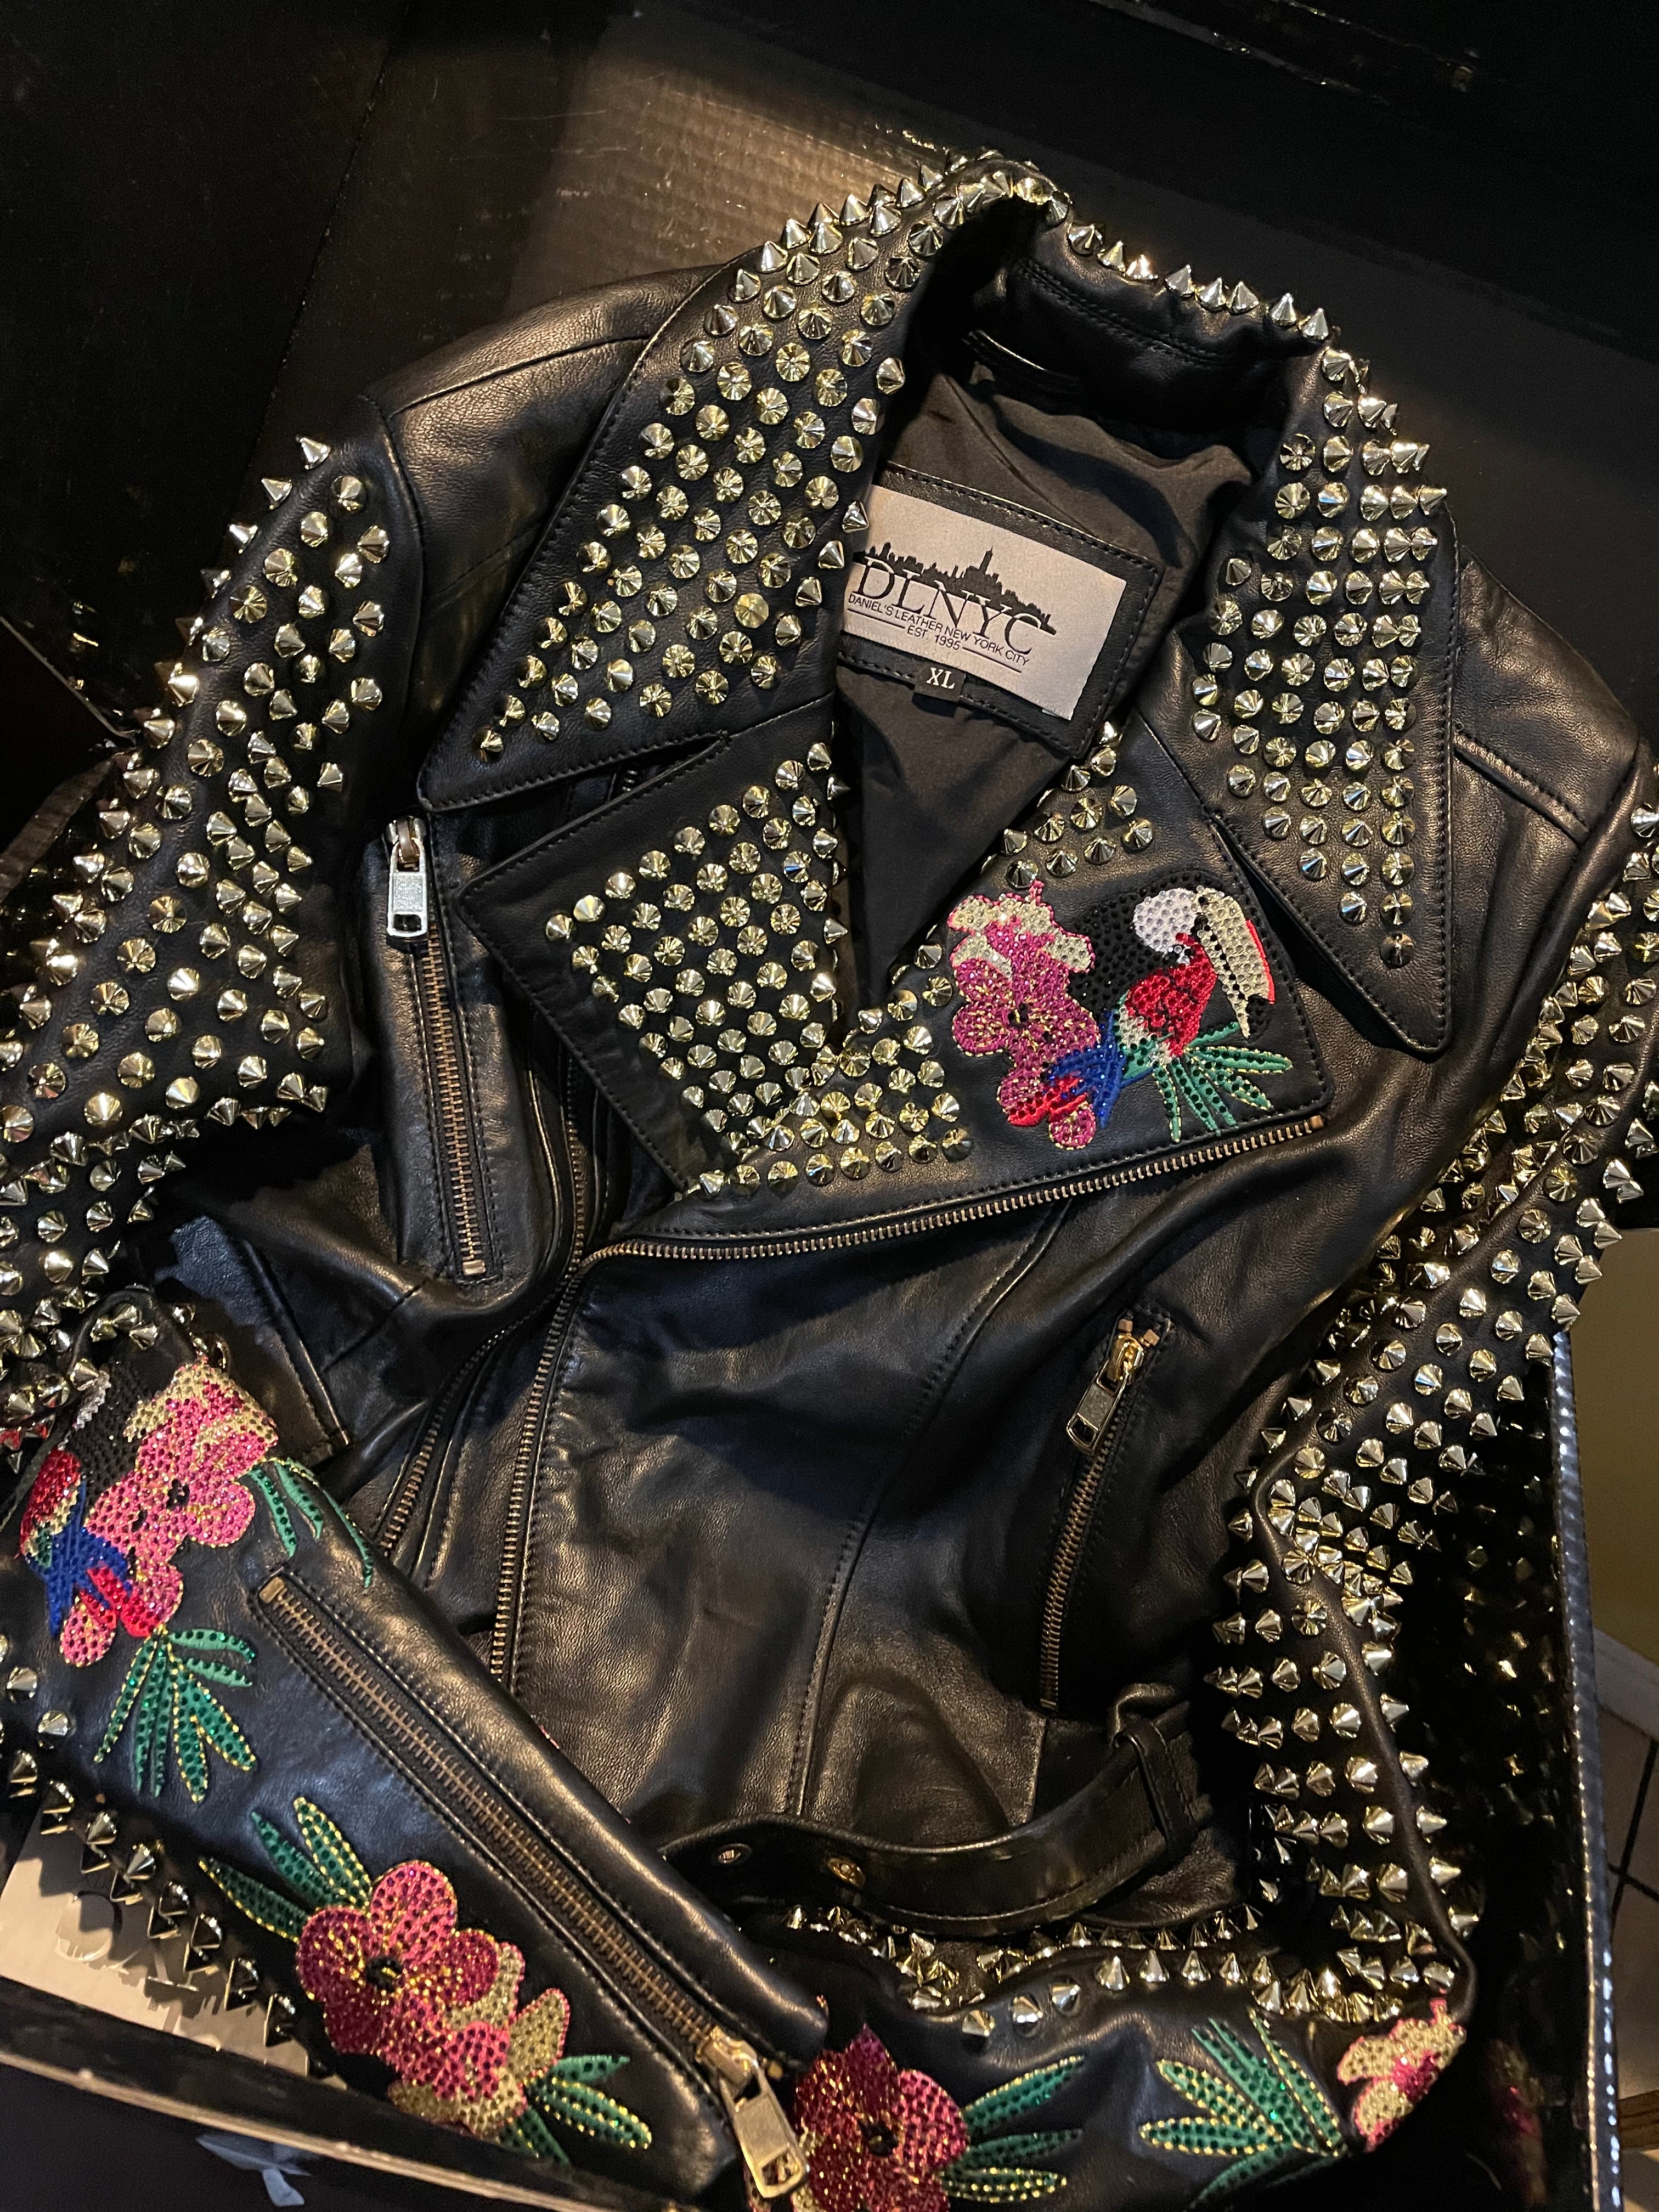 flower leather jacket